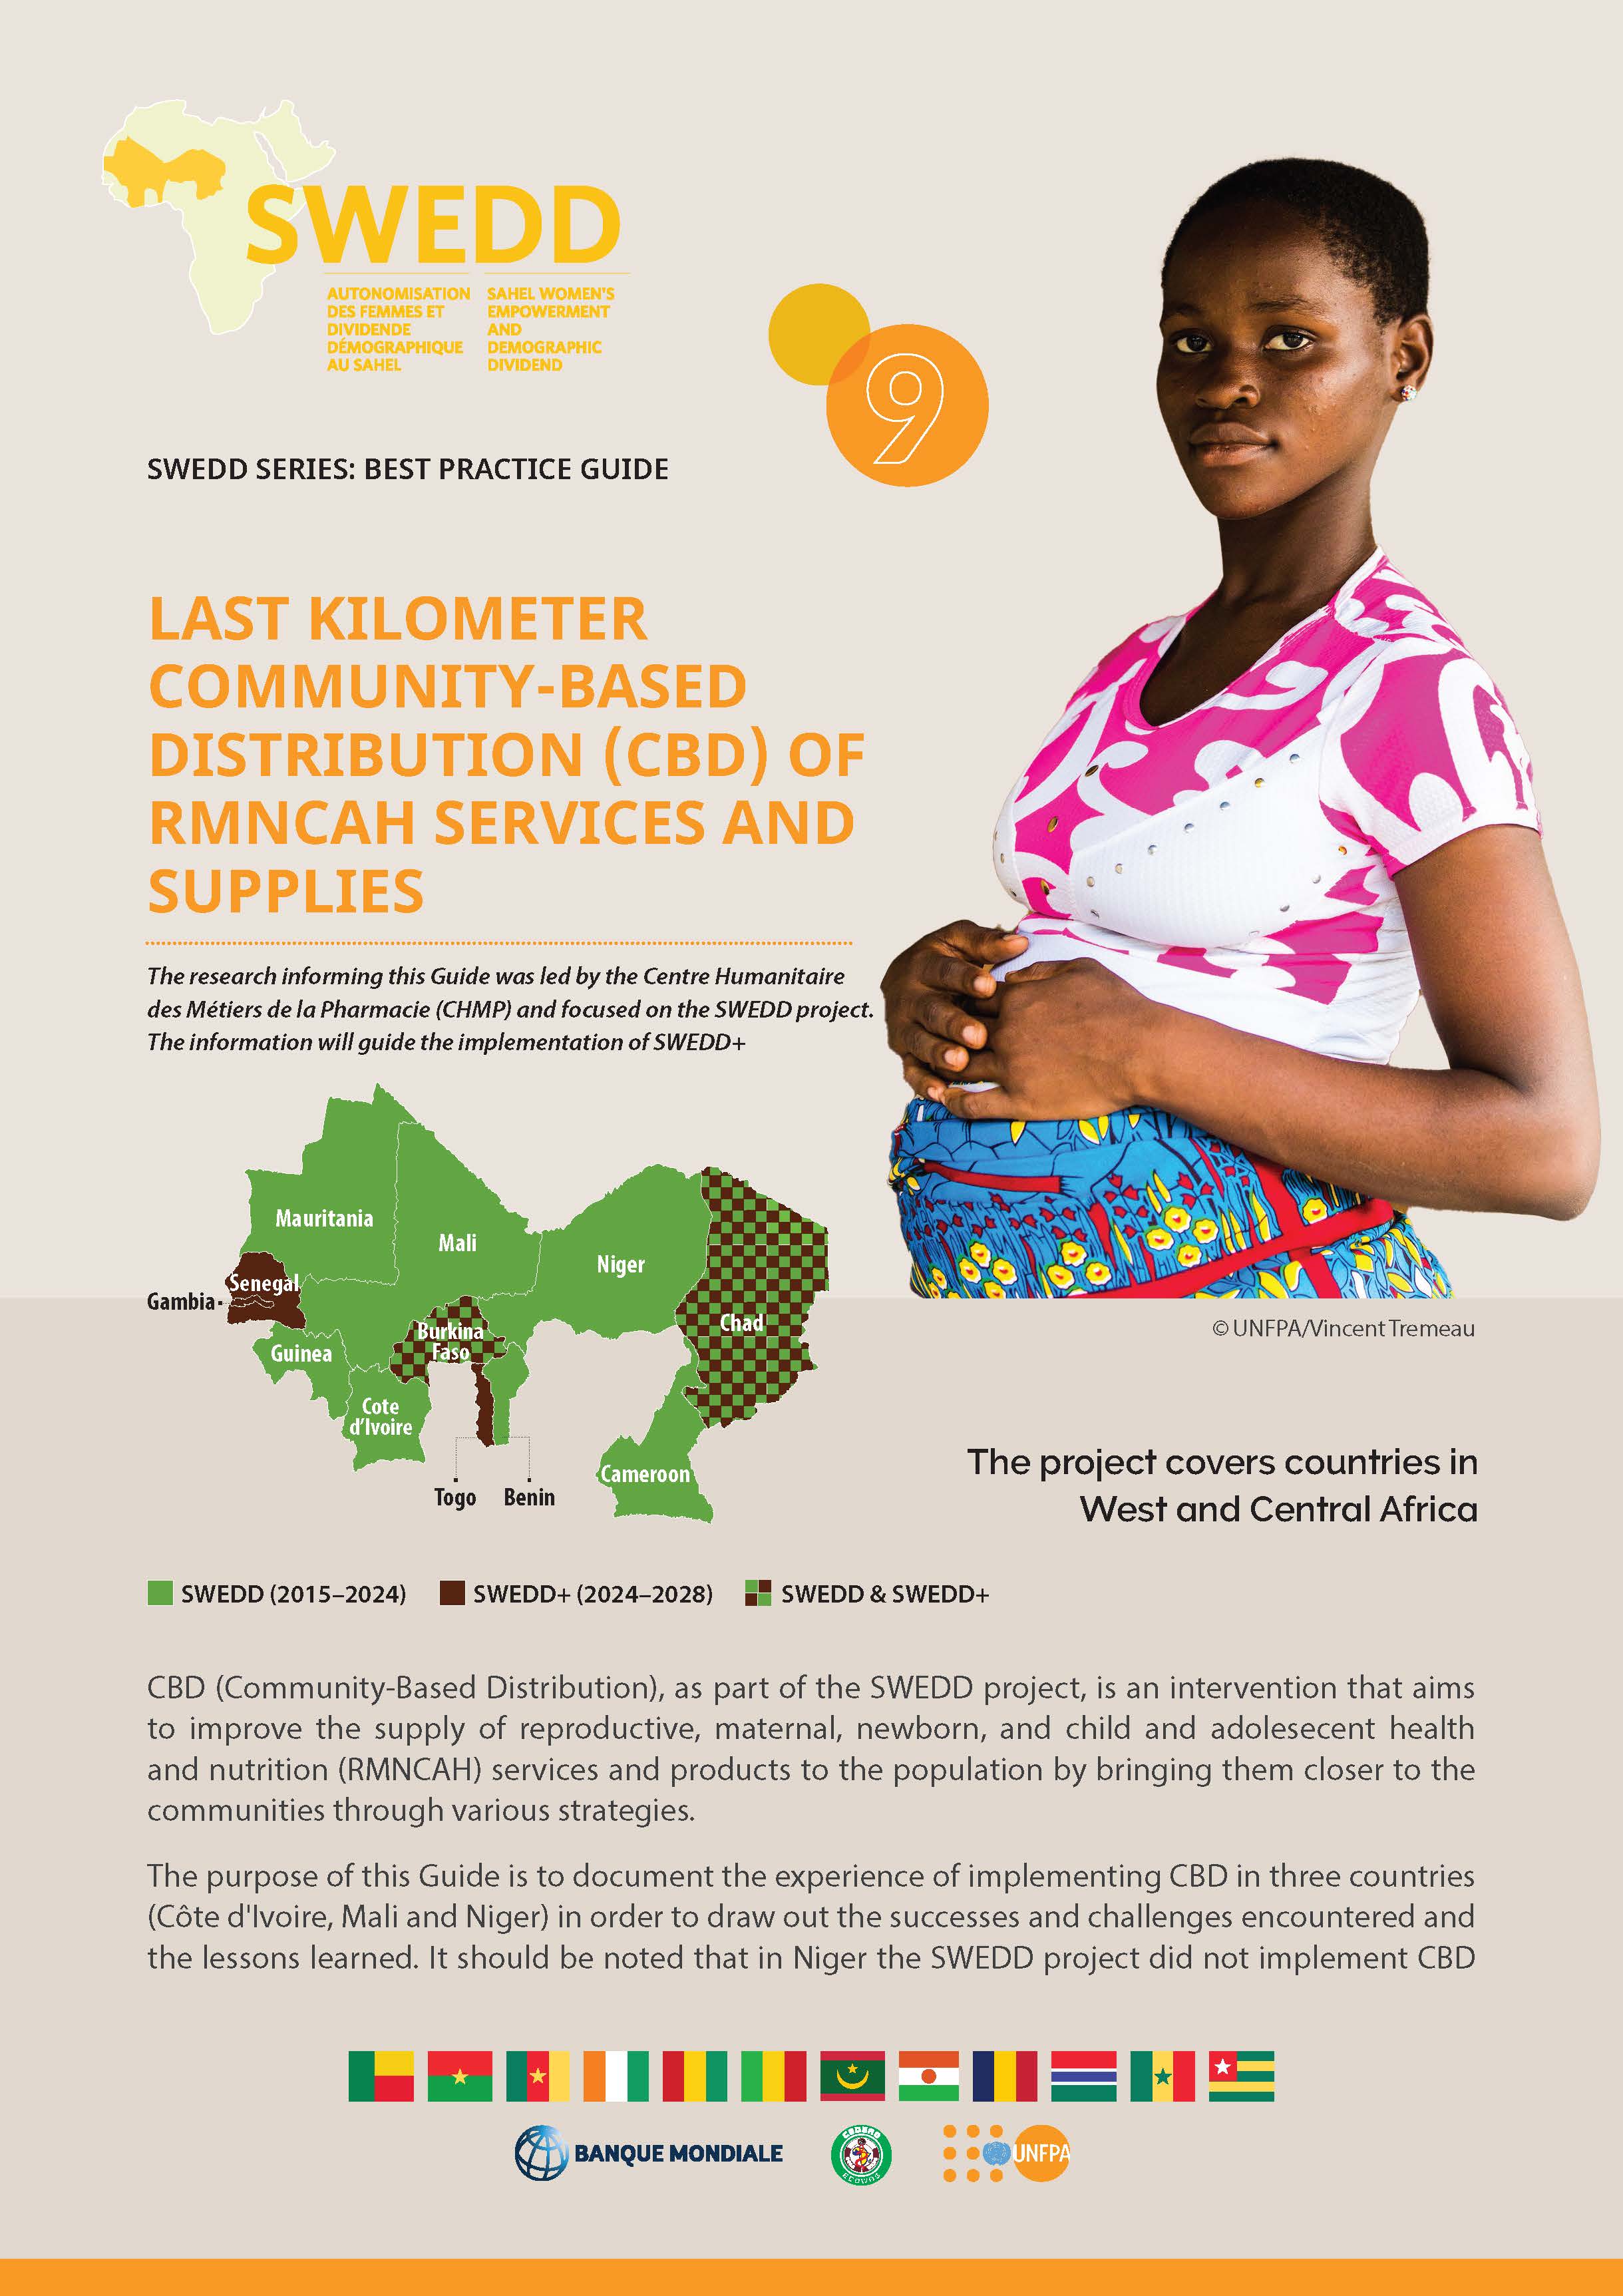 9. Last kilometer community-based distribution